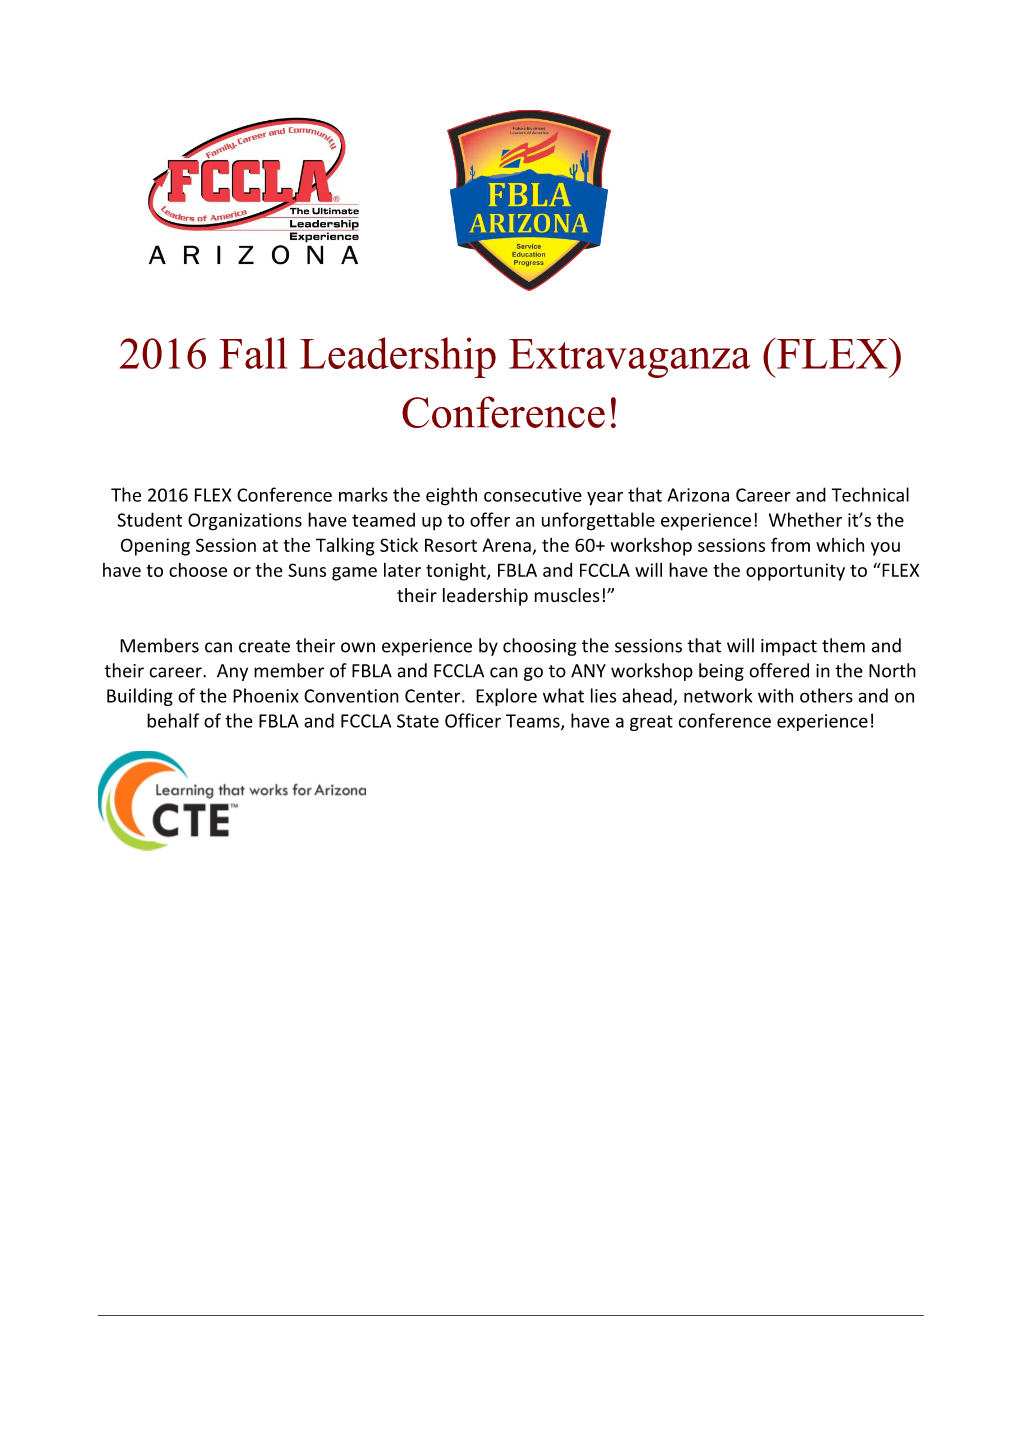 2016 Fall Leadership Extravaganza (FLEX) Conference!